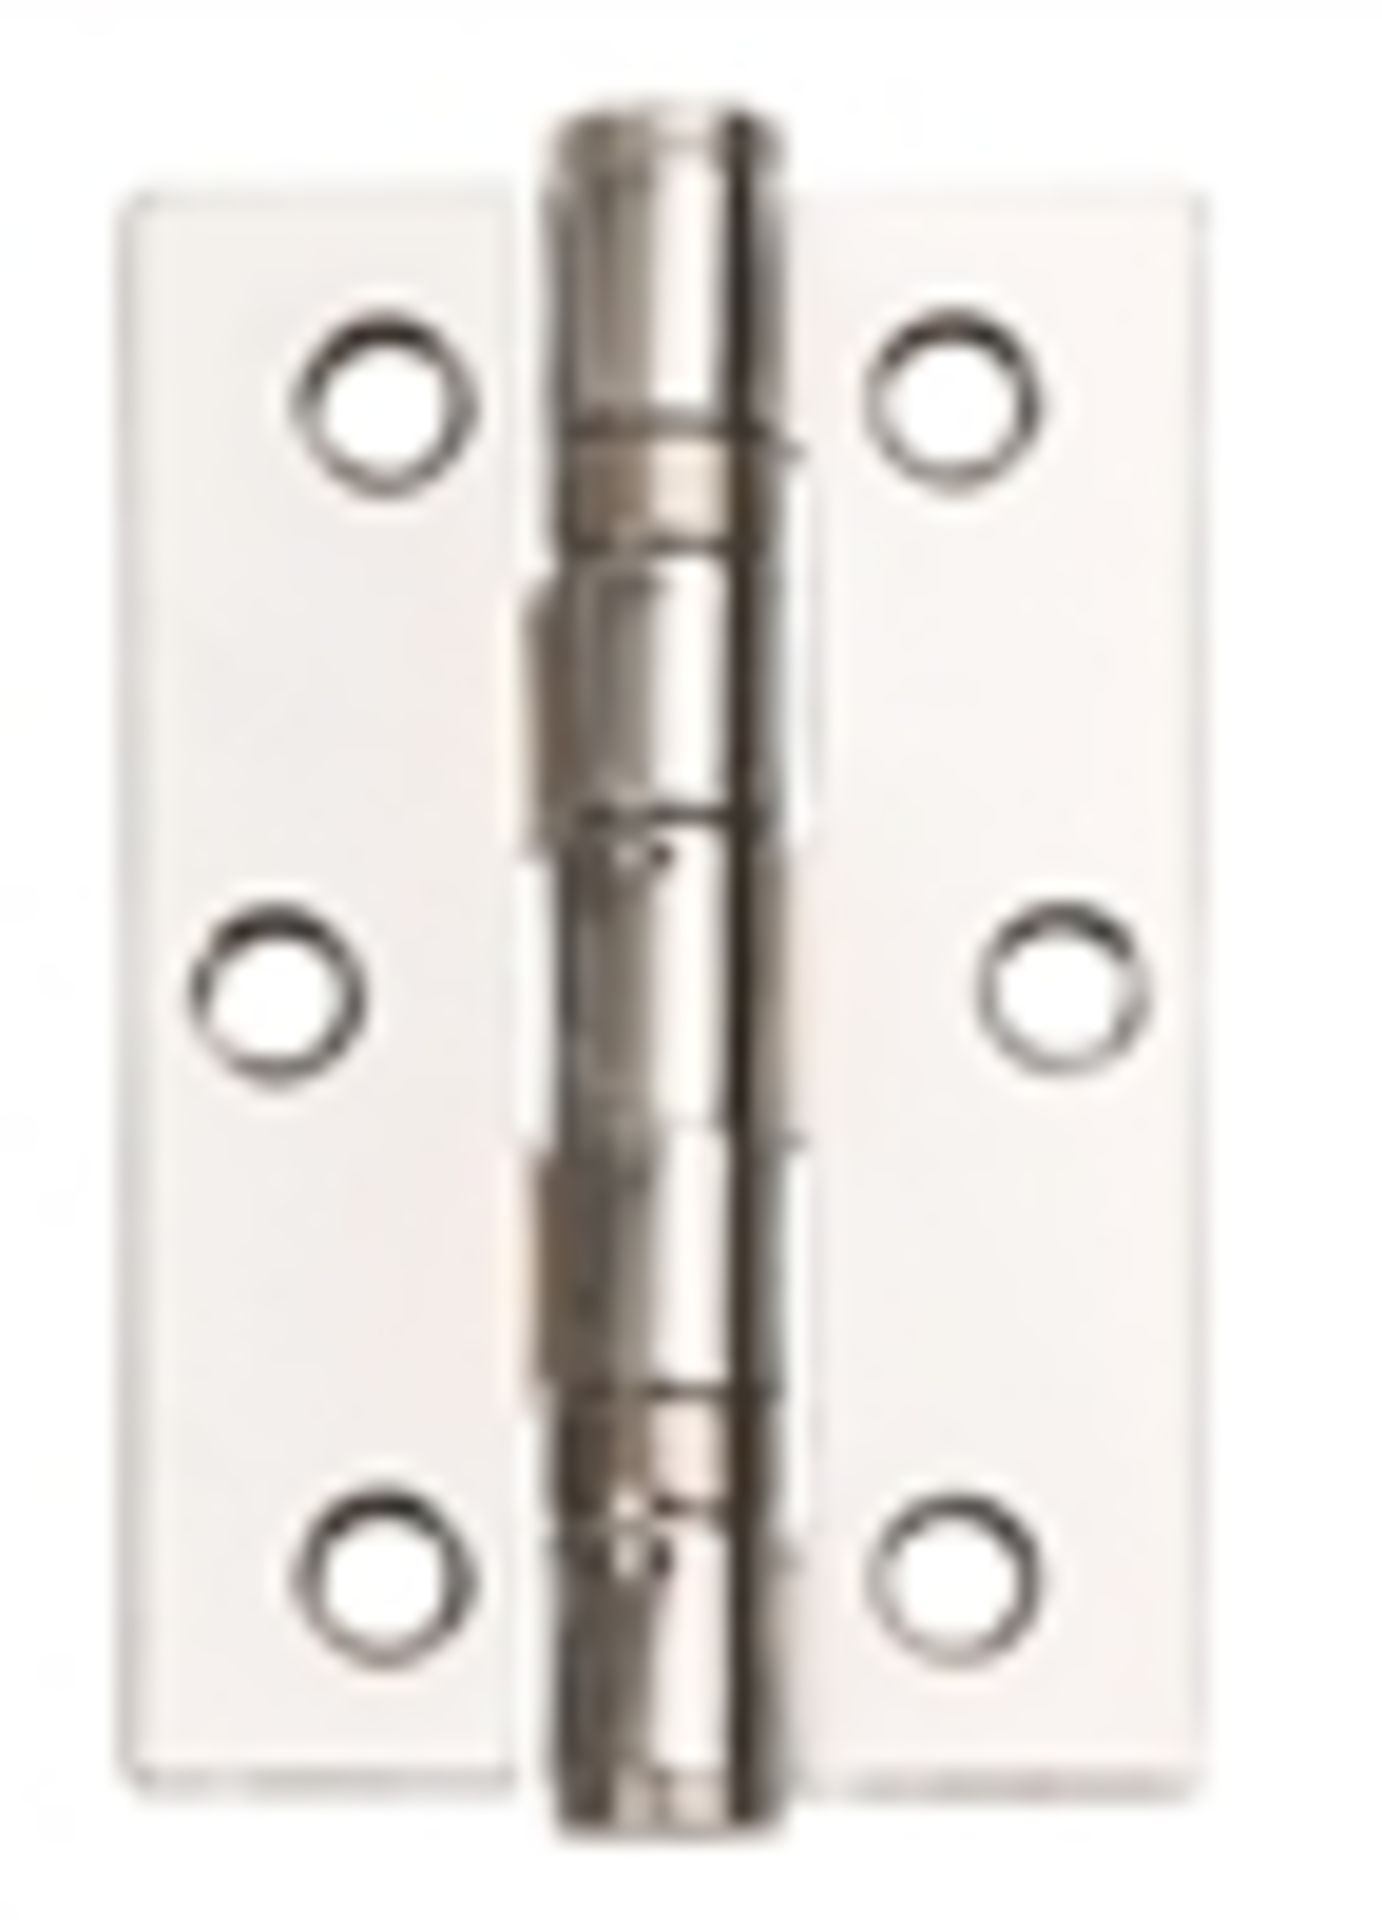 4 Pairs Dale Hardware Venus Door Handle. 3615 Smart Pack Inc. Hinges And Smart Lock - Image 3 of 3